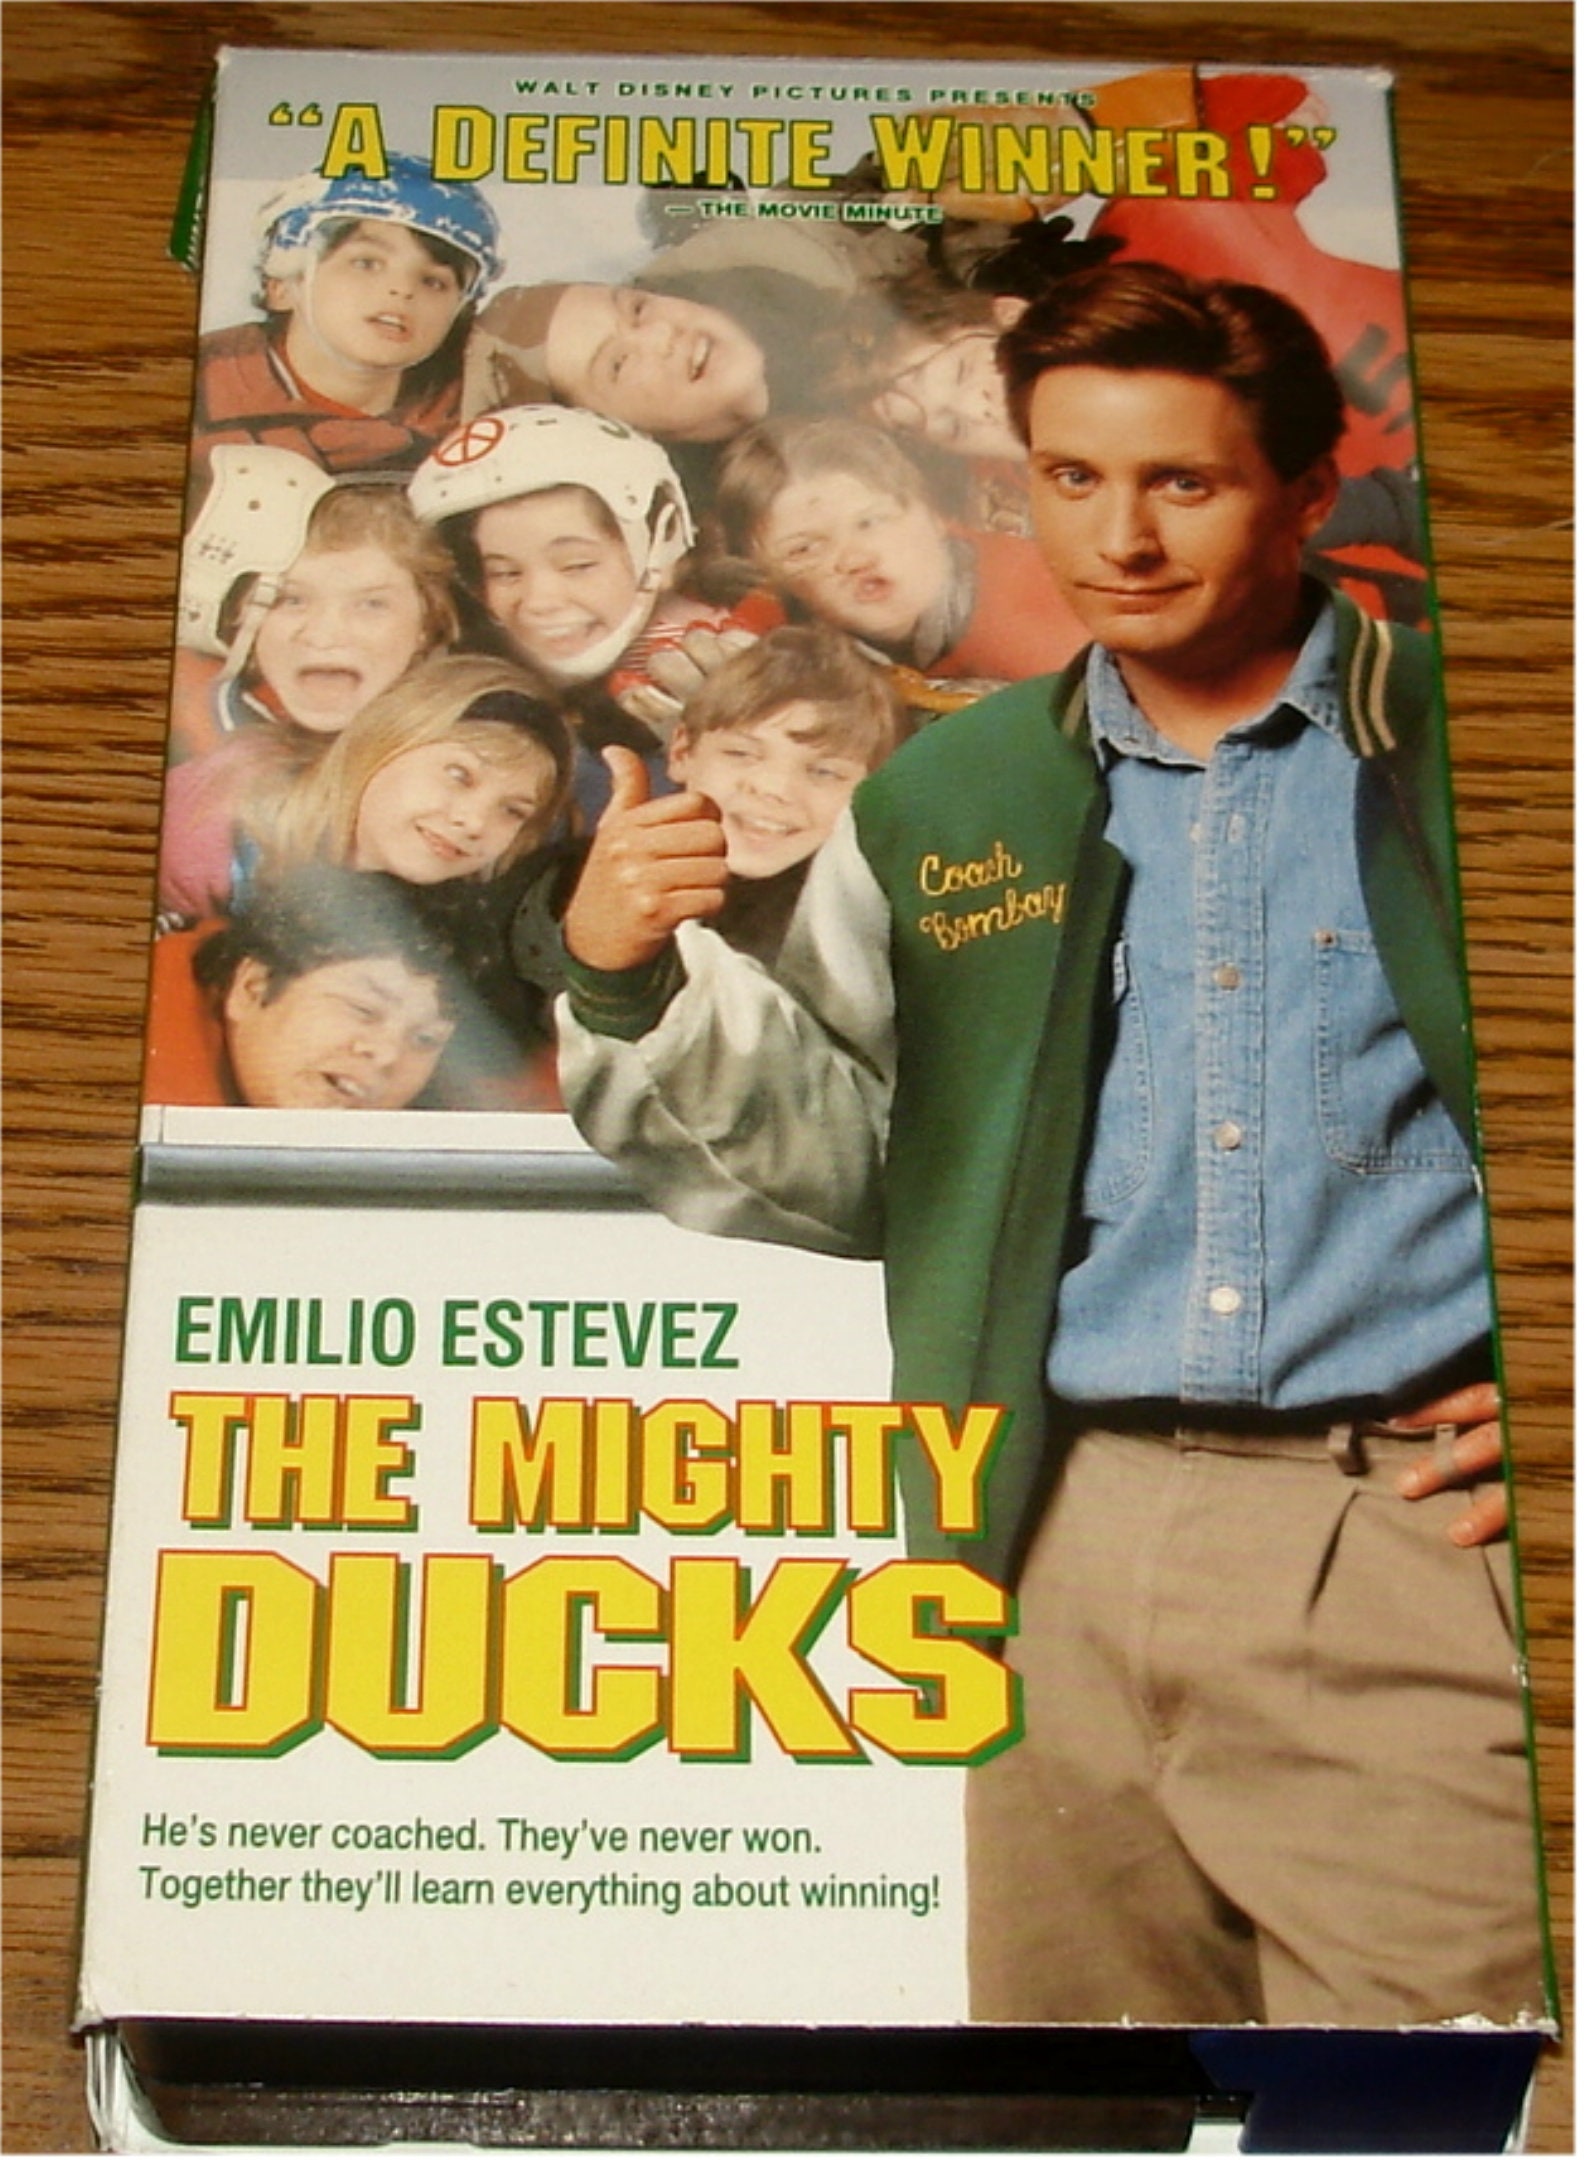 Signed Emilio Estevez Autographed Mighty Ducks Coach Bombay Jacket Beckett  COA